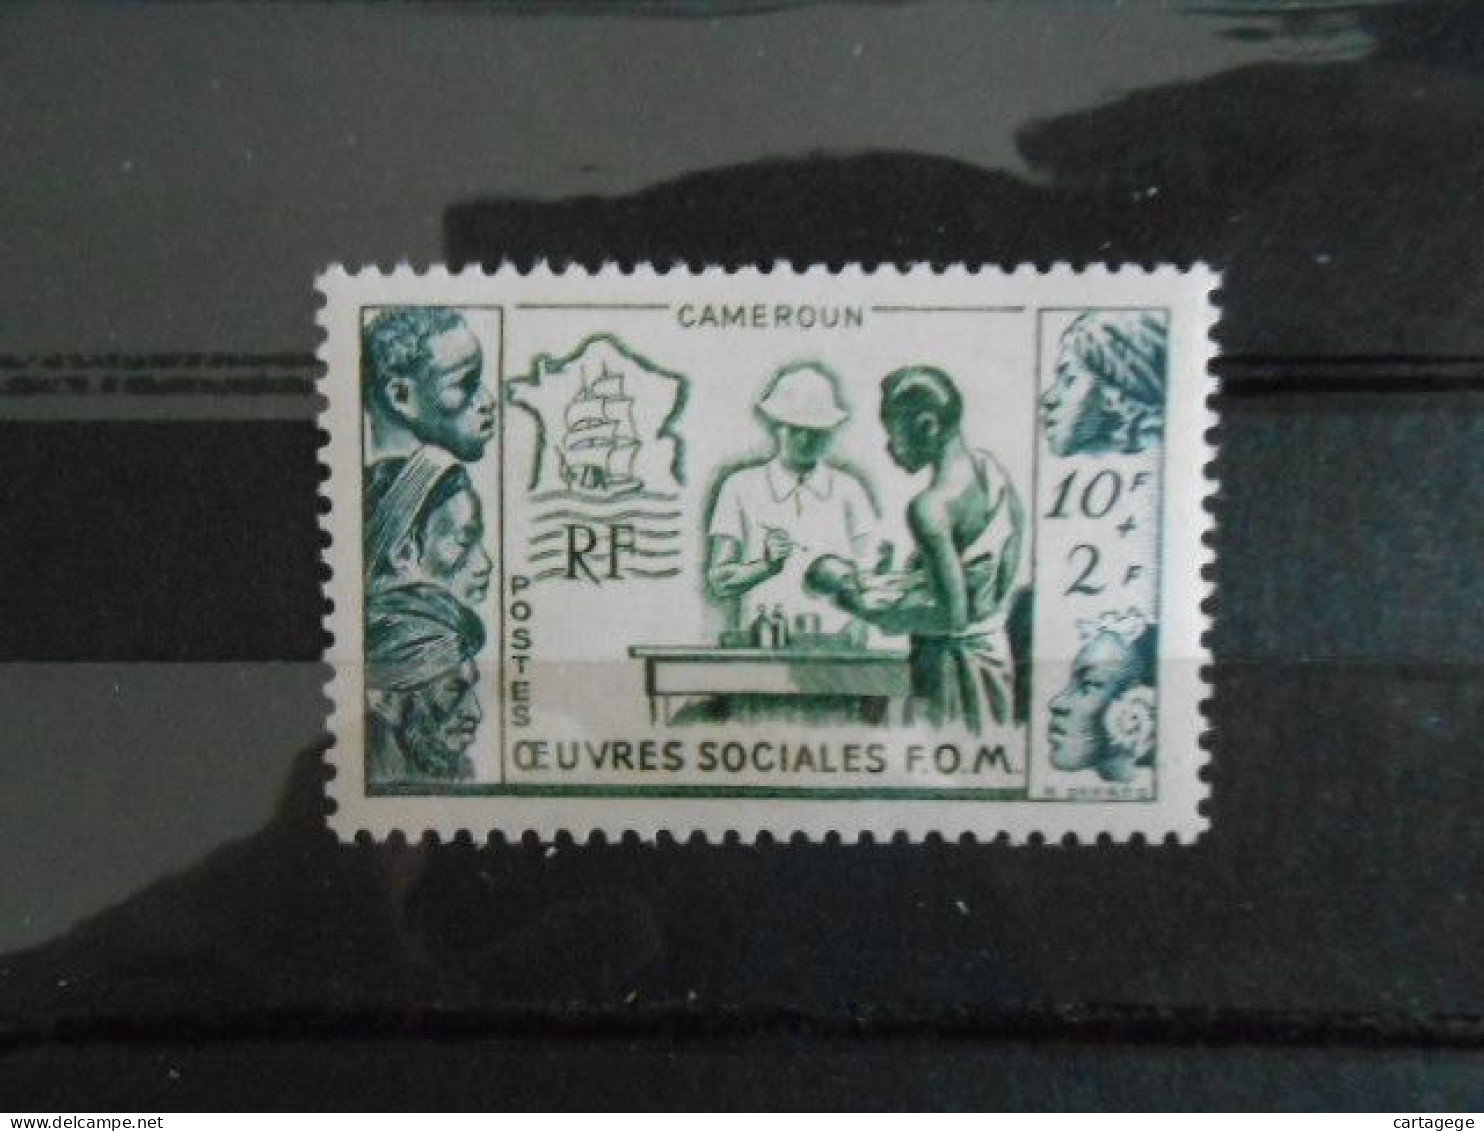 CAMEROUN YT 295 - 10e ANNIVERSAIRE DE LA LIBERATION* - Unused Stamps